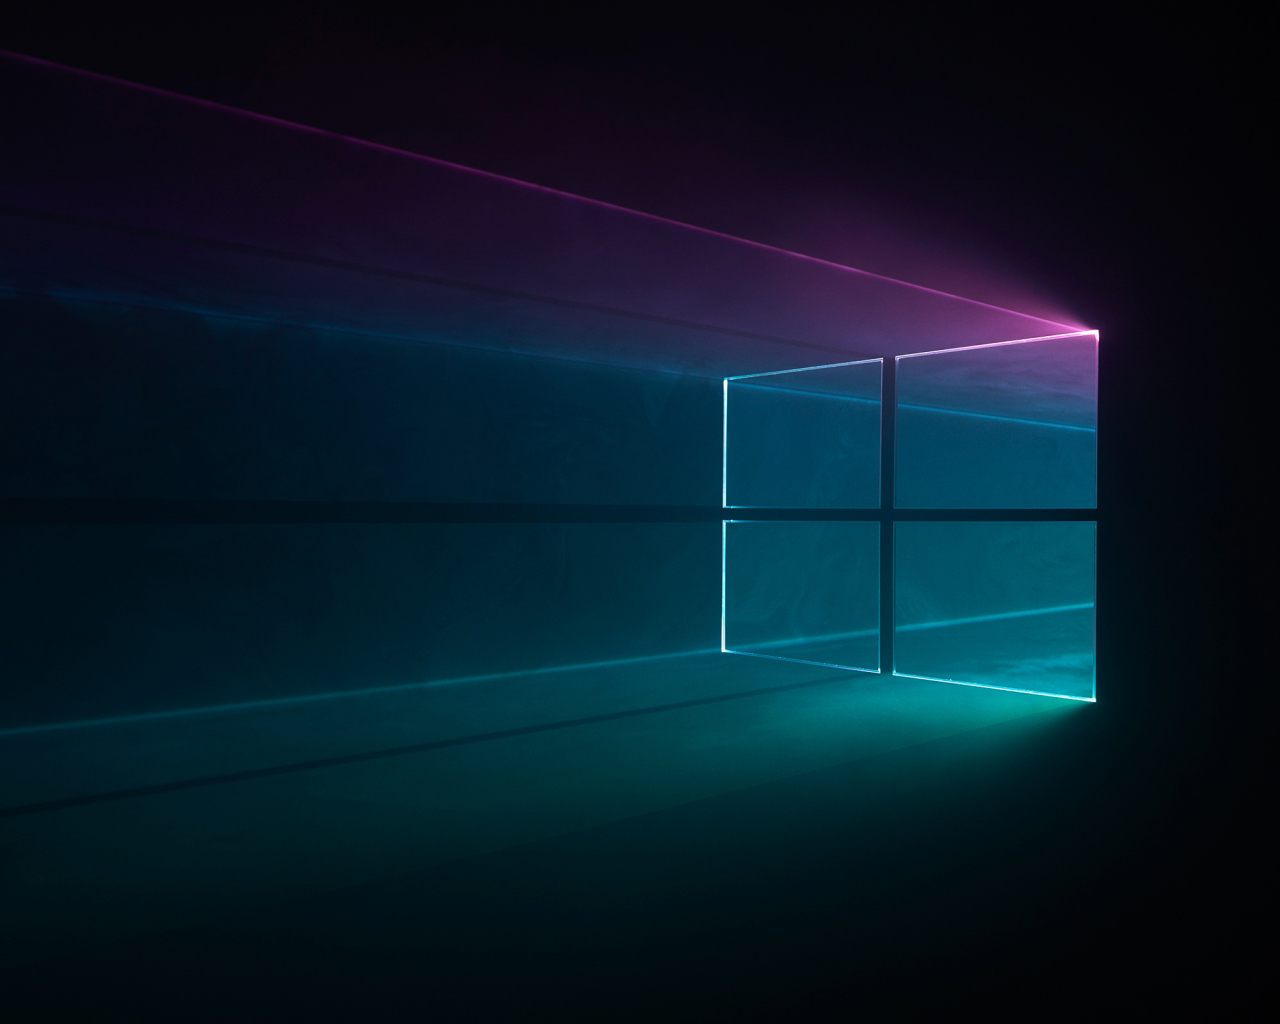 Windows 10 , HD Wallpaper & Backgrounds